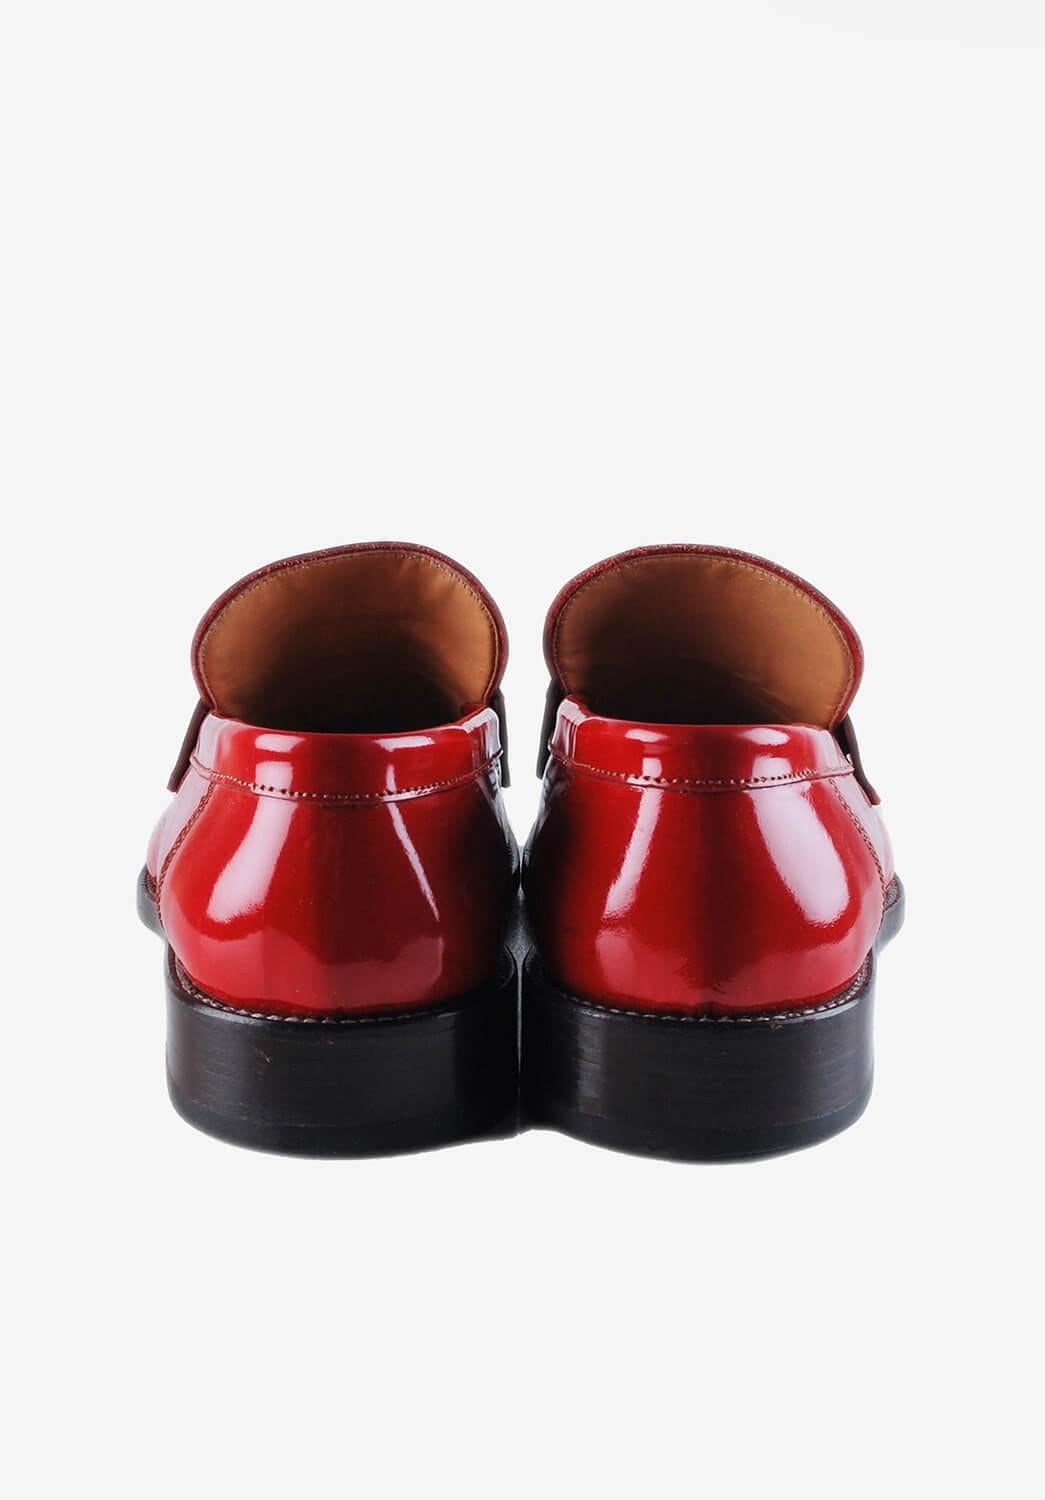 Vintage Dolce&Gabbana Red Flats Patent Leather Men Shoes Size 8, EUR43 For Sale 1